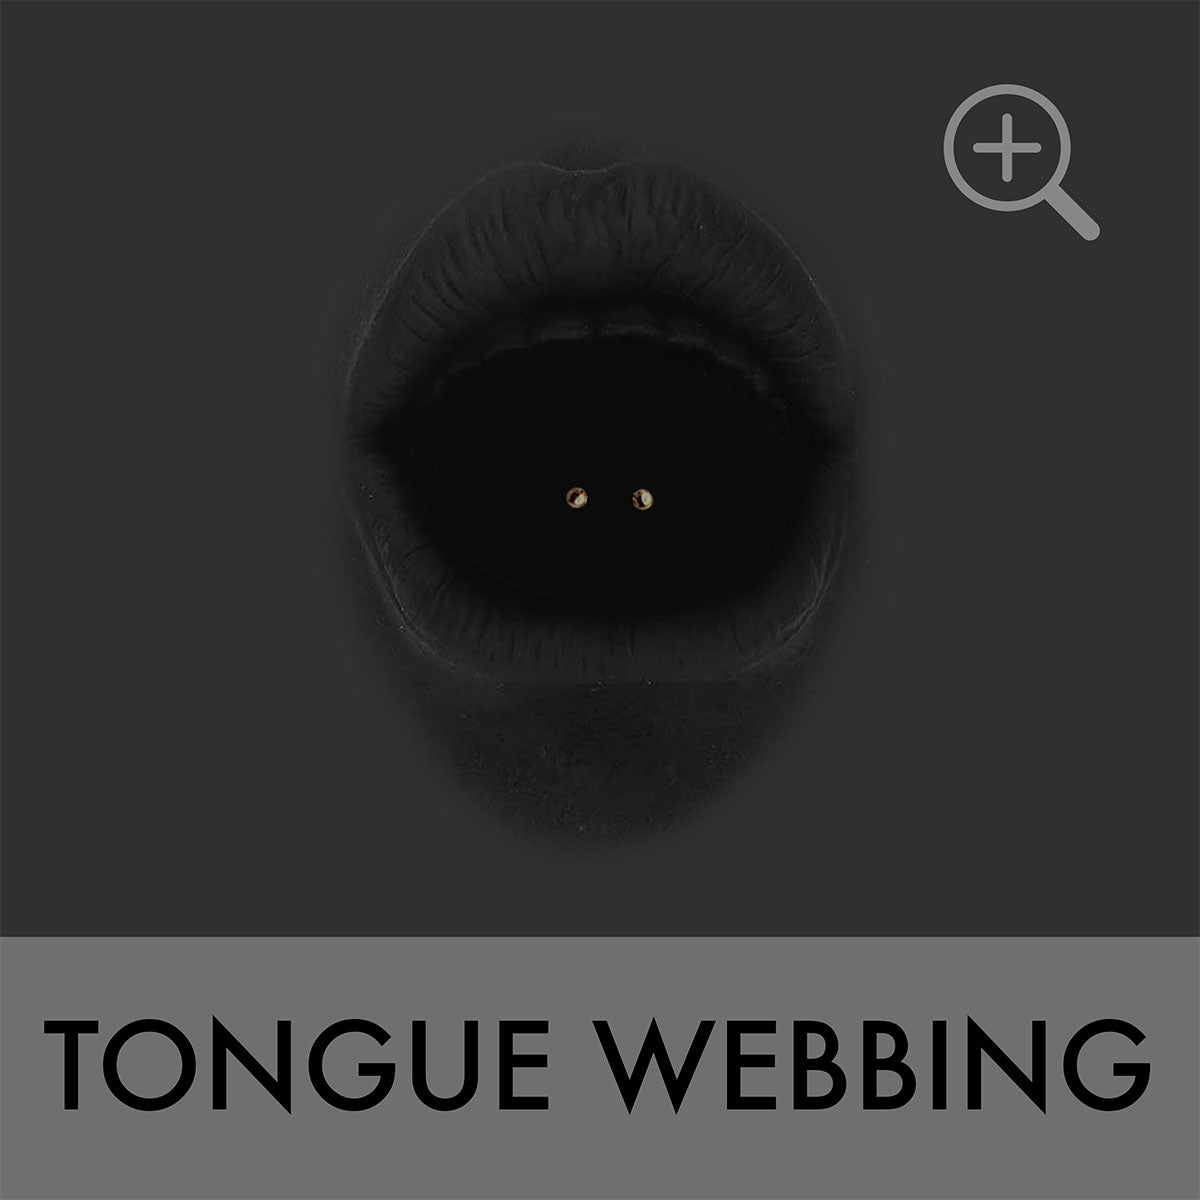 PIERCING MENU tongue webbing copy 2.png.jpg__PID:f3fff975-3c63-45fd-b6f5-e9043a472146